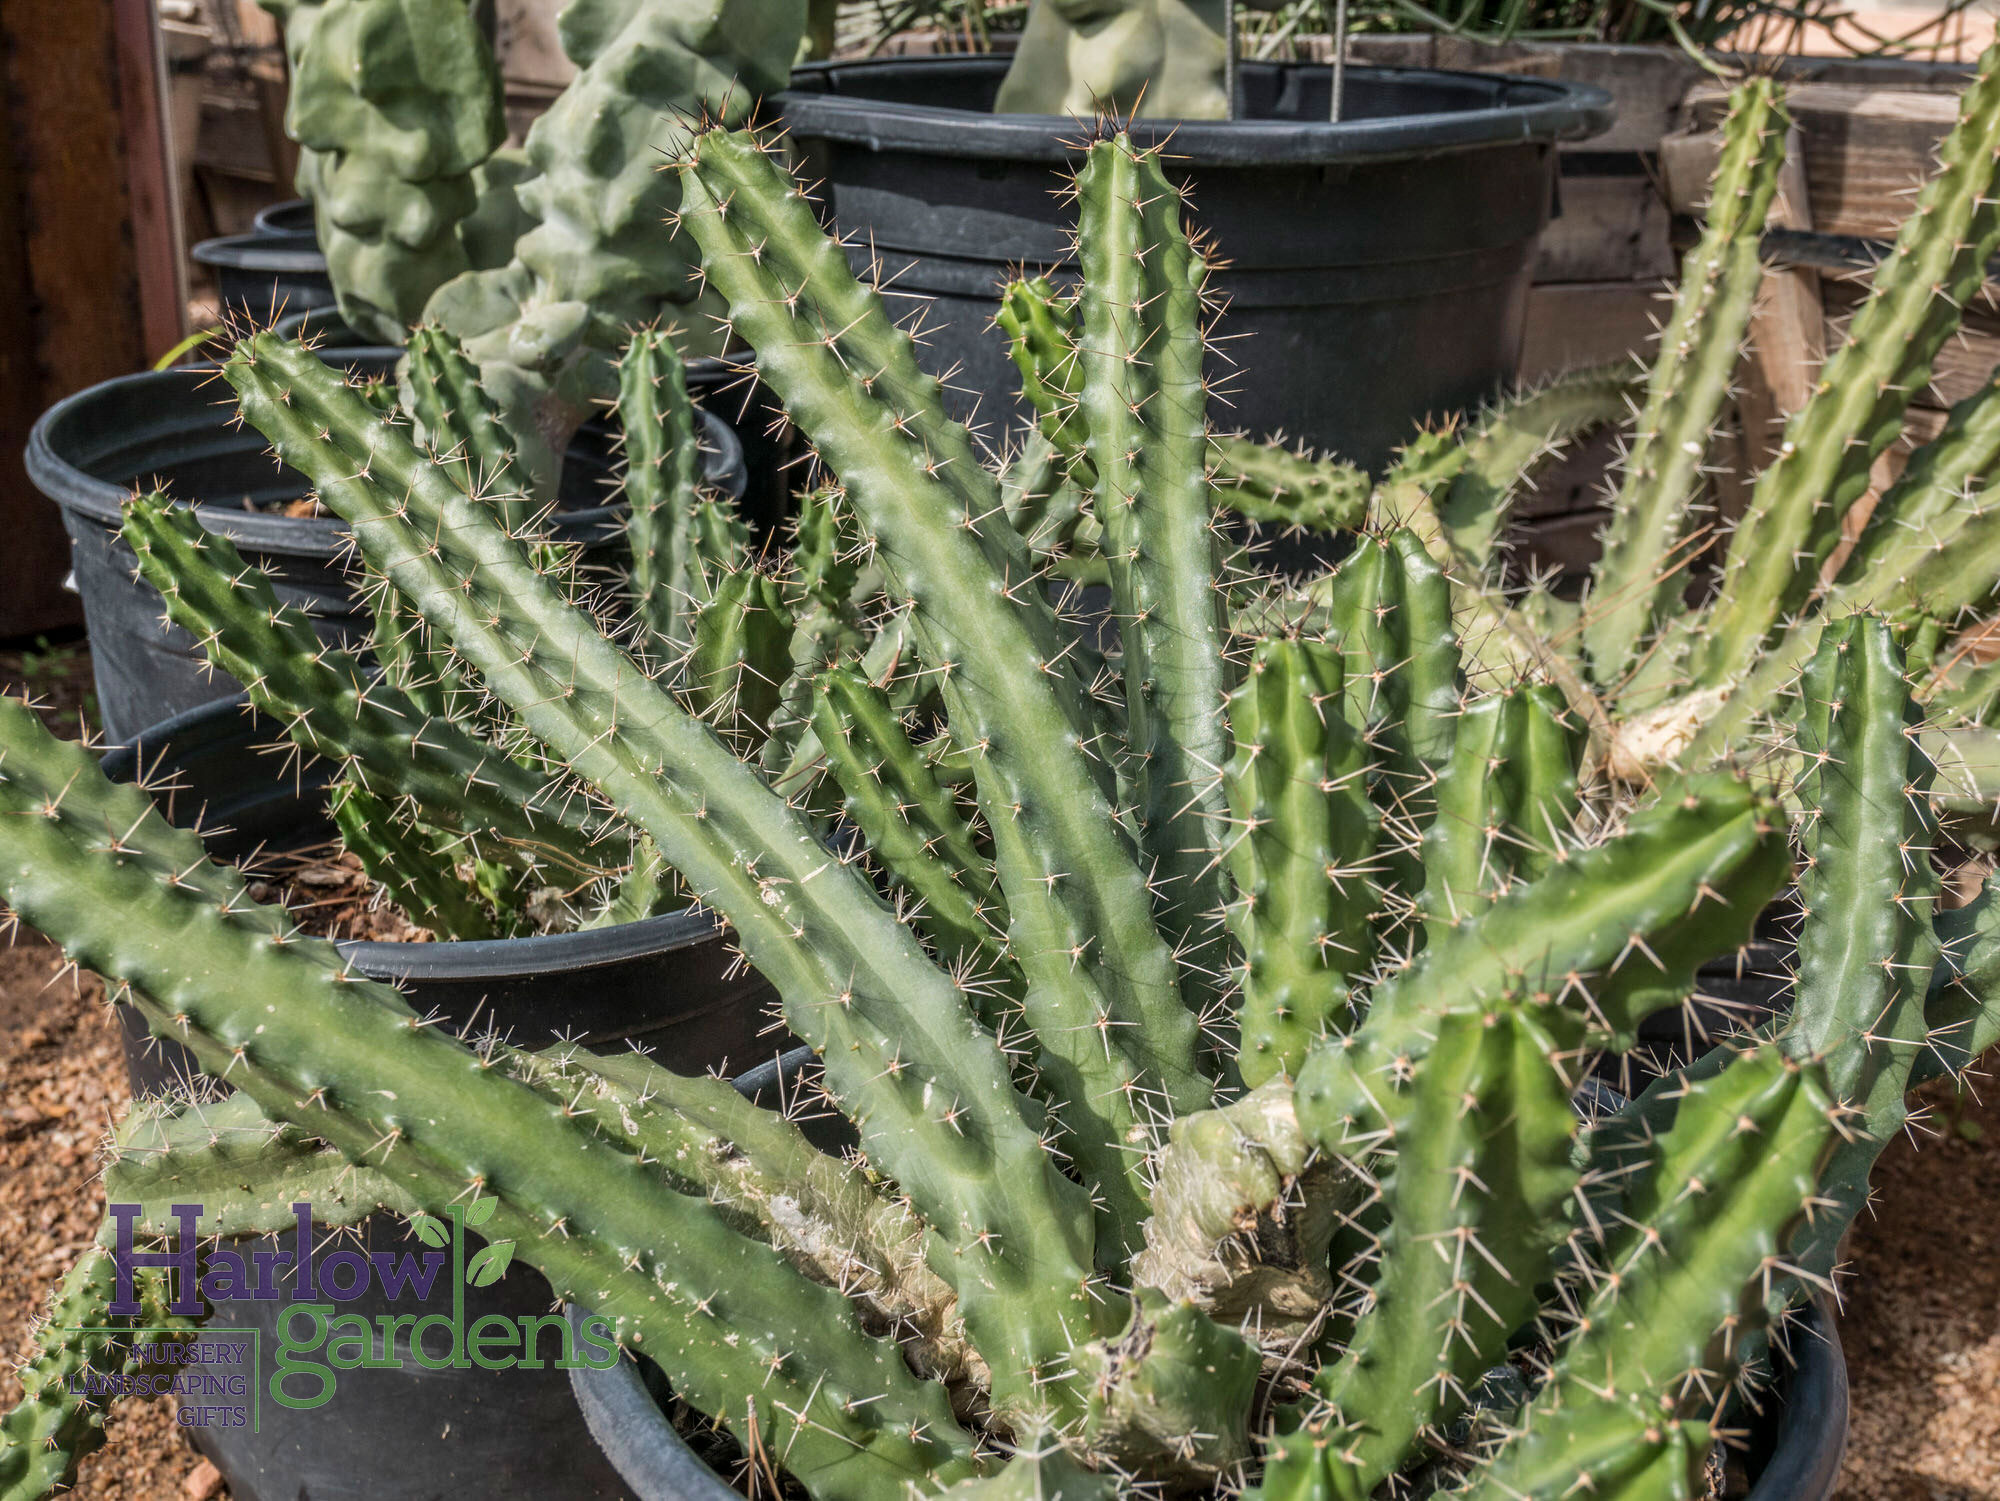 Lady Finger Cactus - Harlow Gardens